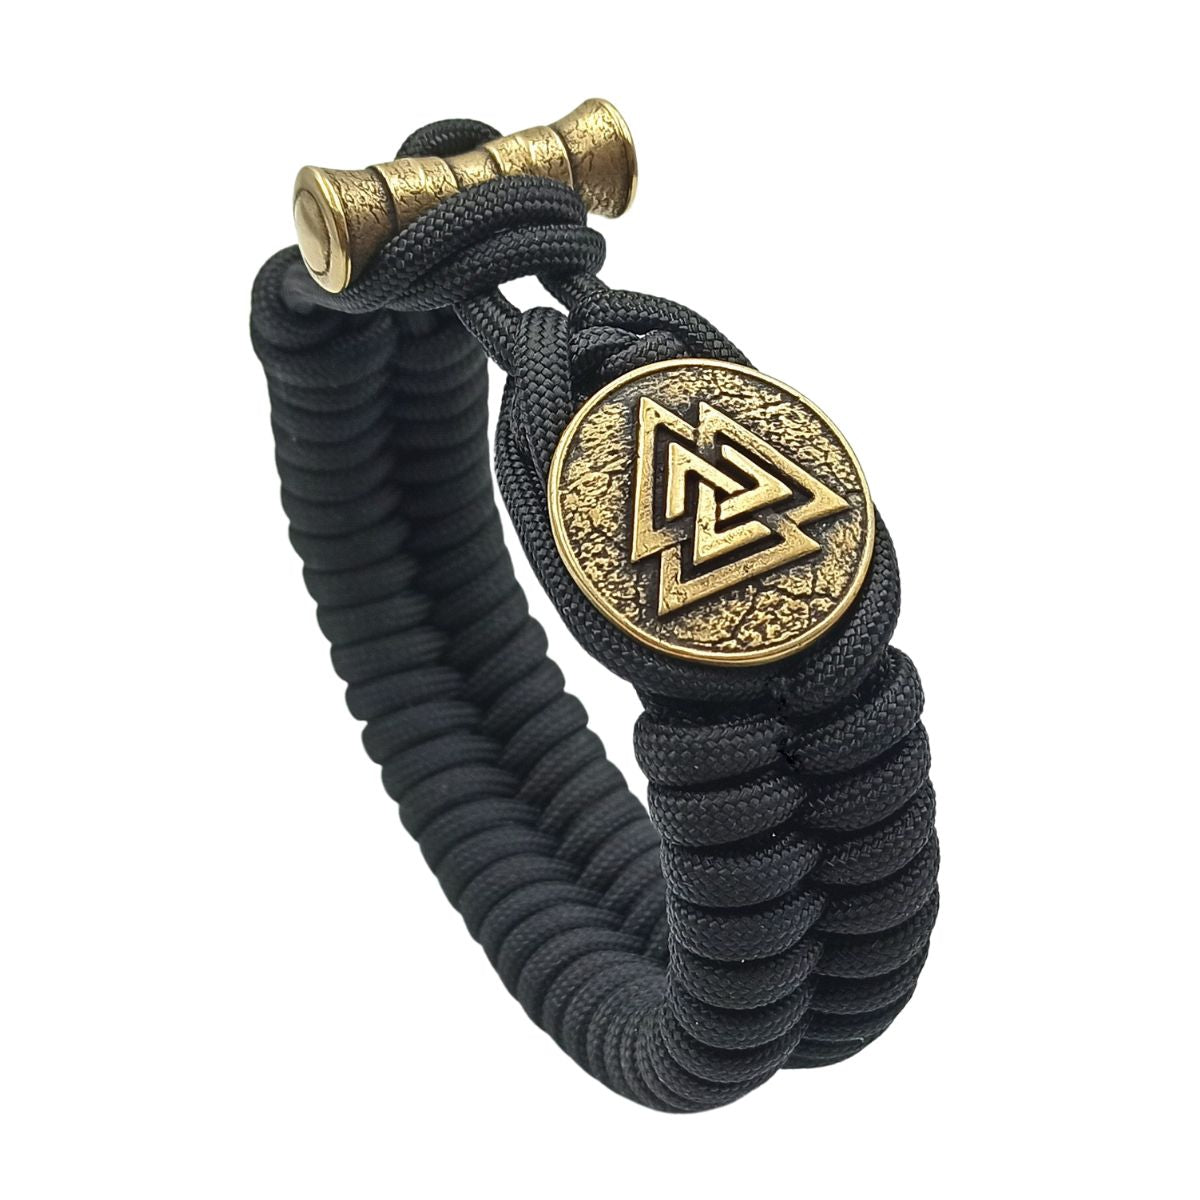 Valknut paracord bracelet 6 inch | 15 Cm 1 - Black 